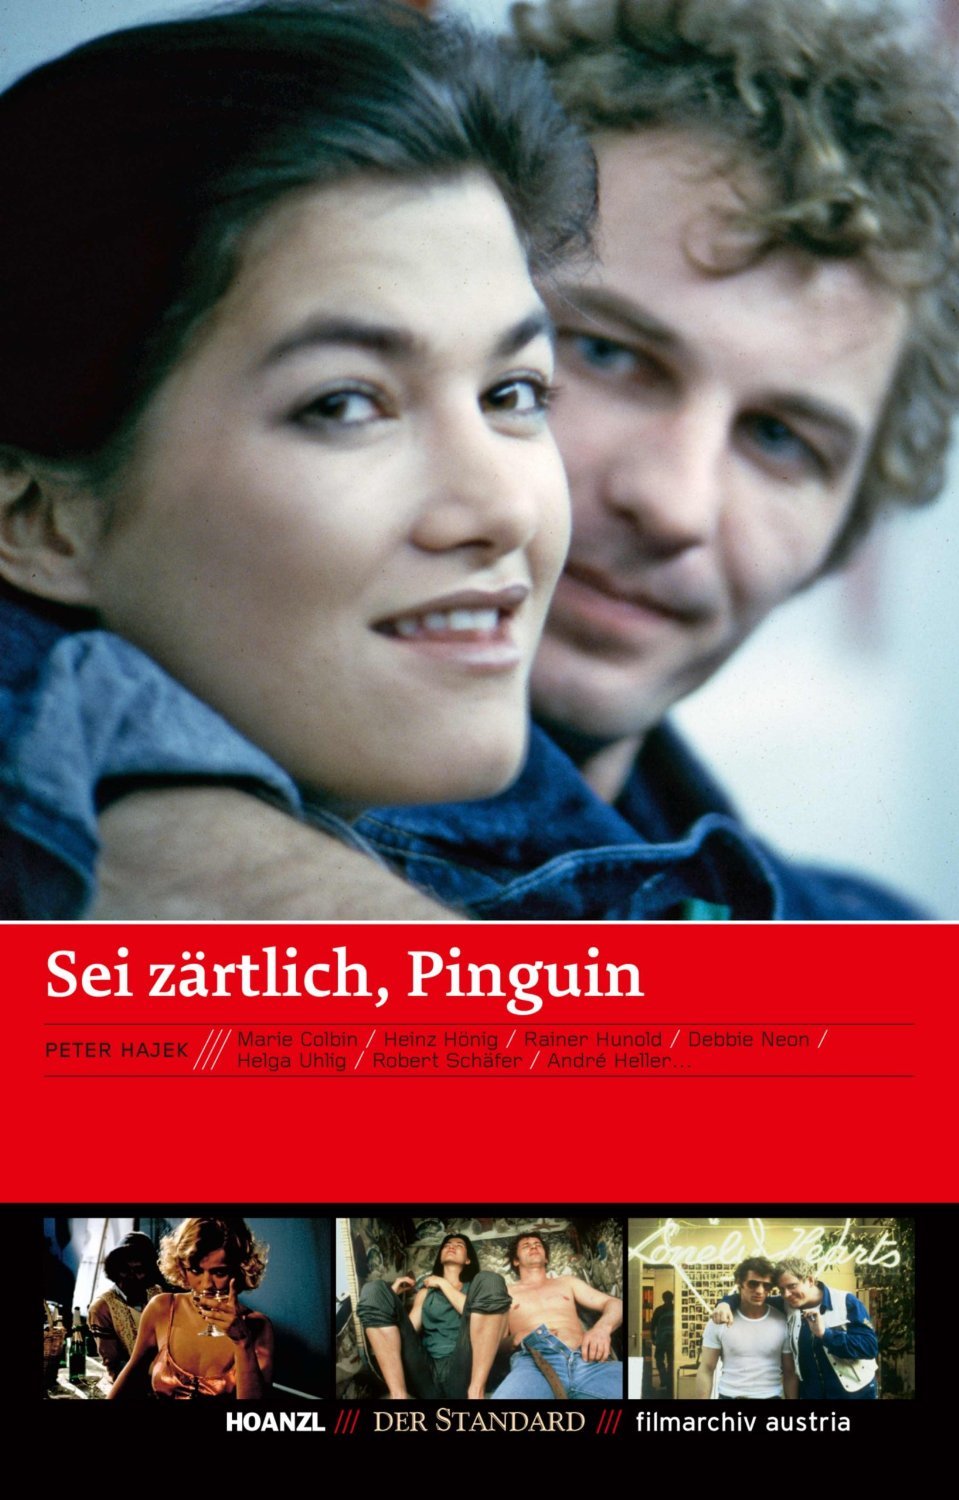 Sei zärtlich Pinguin (1982) with English Subtitles on DVD on DVD